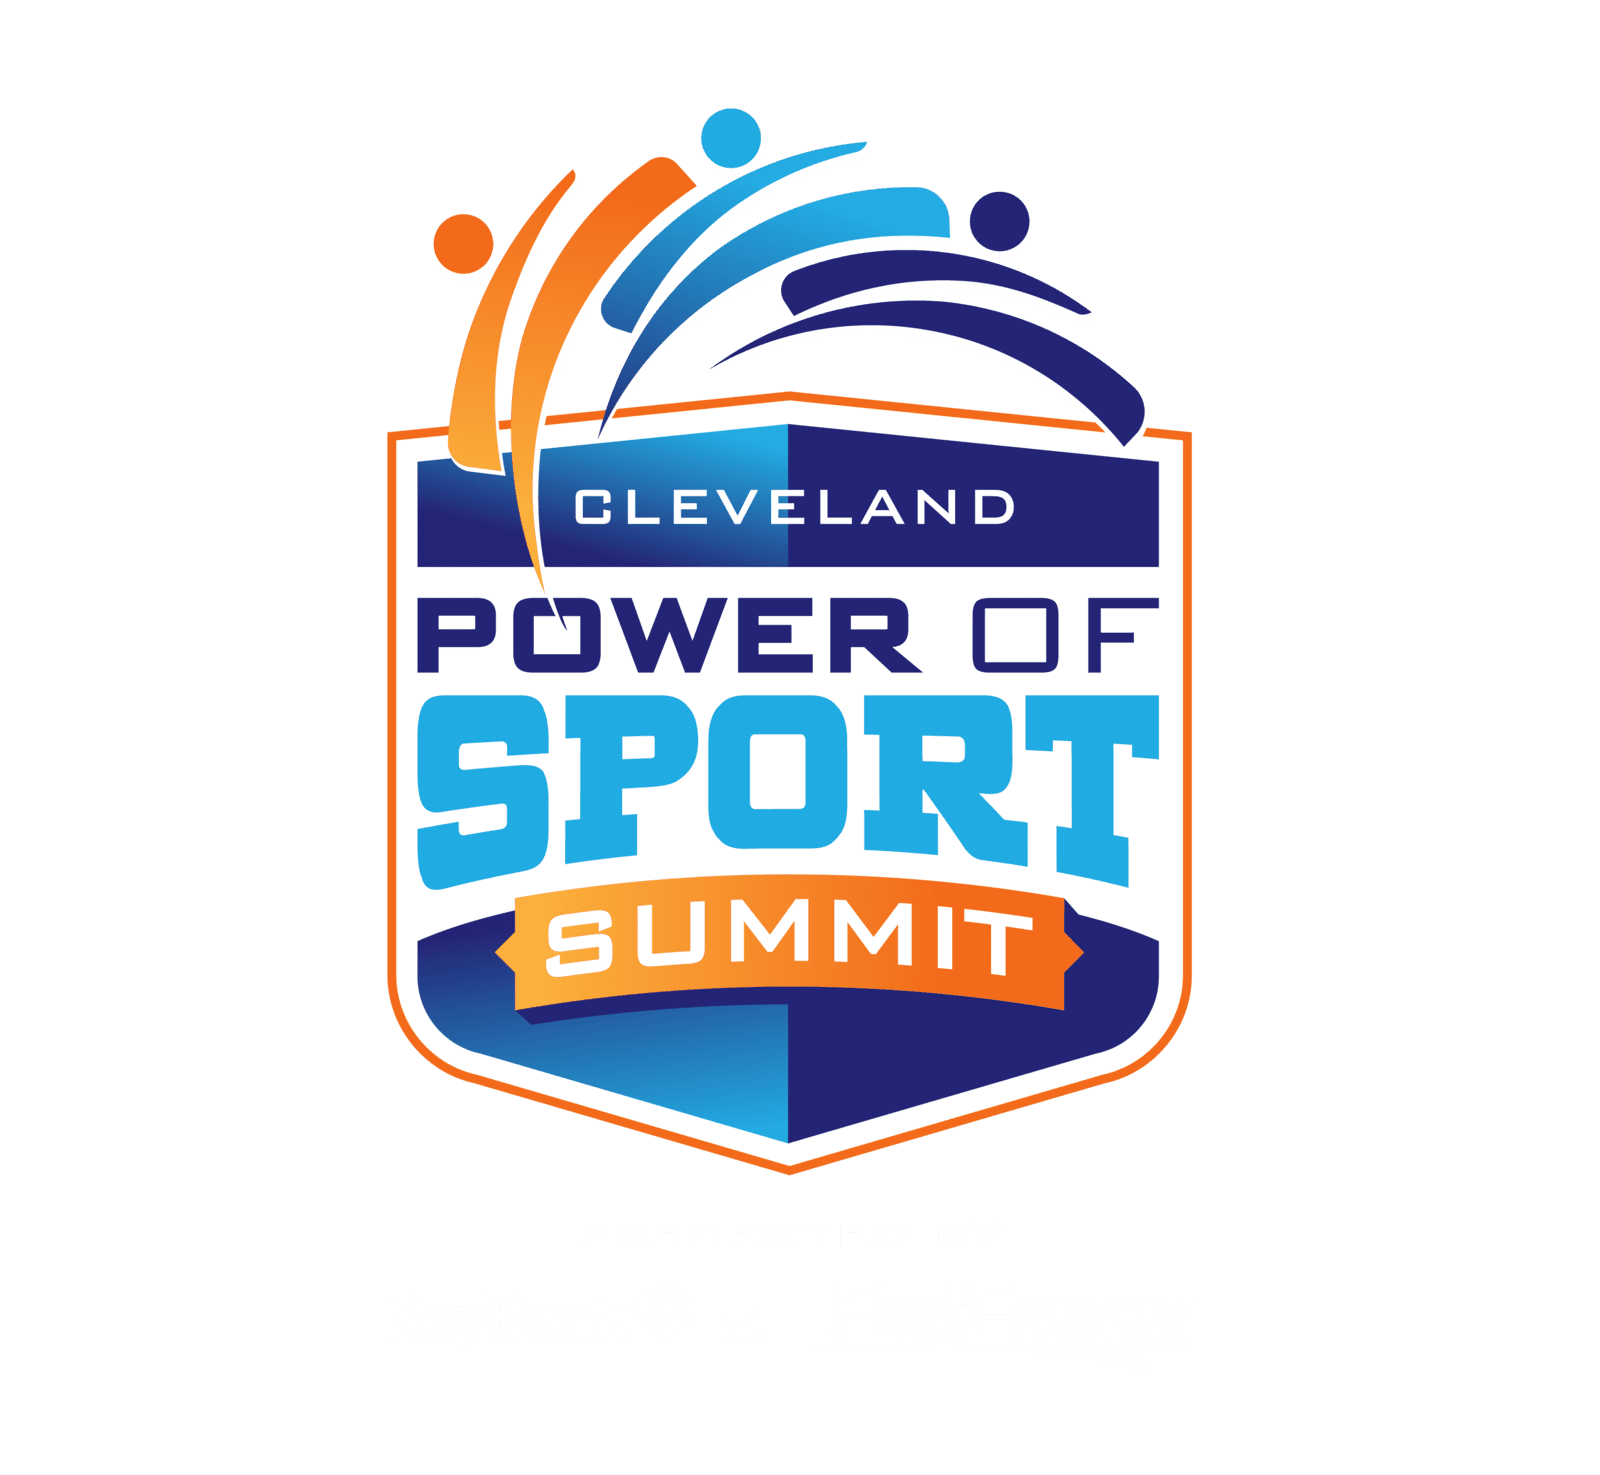 cleveland-power-of-sport-summit-logo